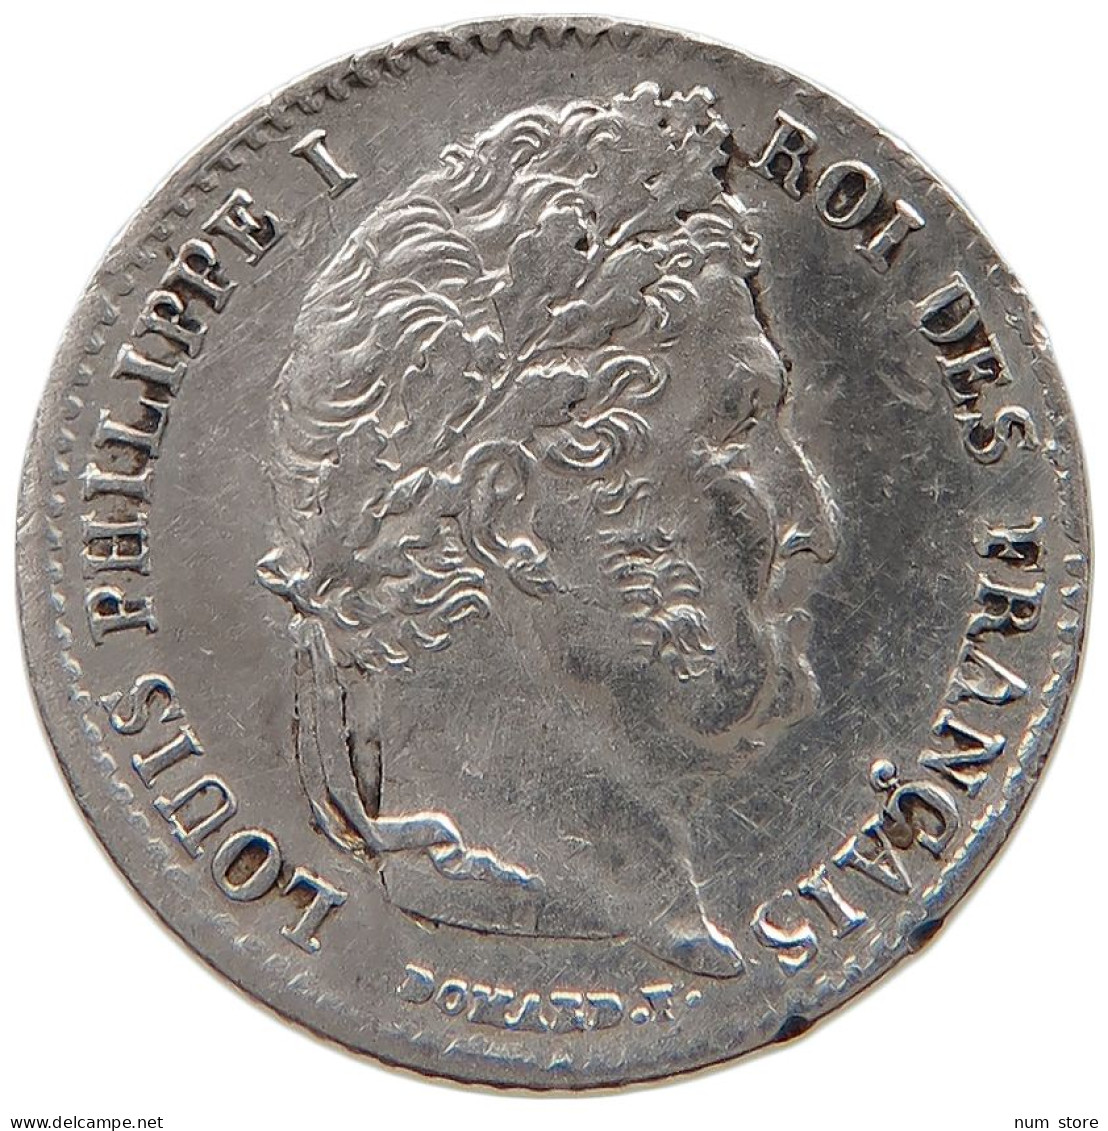 FRANCE 1/4 FRANC 1839 A LOUIS PHILIPPE I. (1830-1848) #t143 0643 - 1/4 Franc